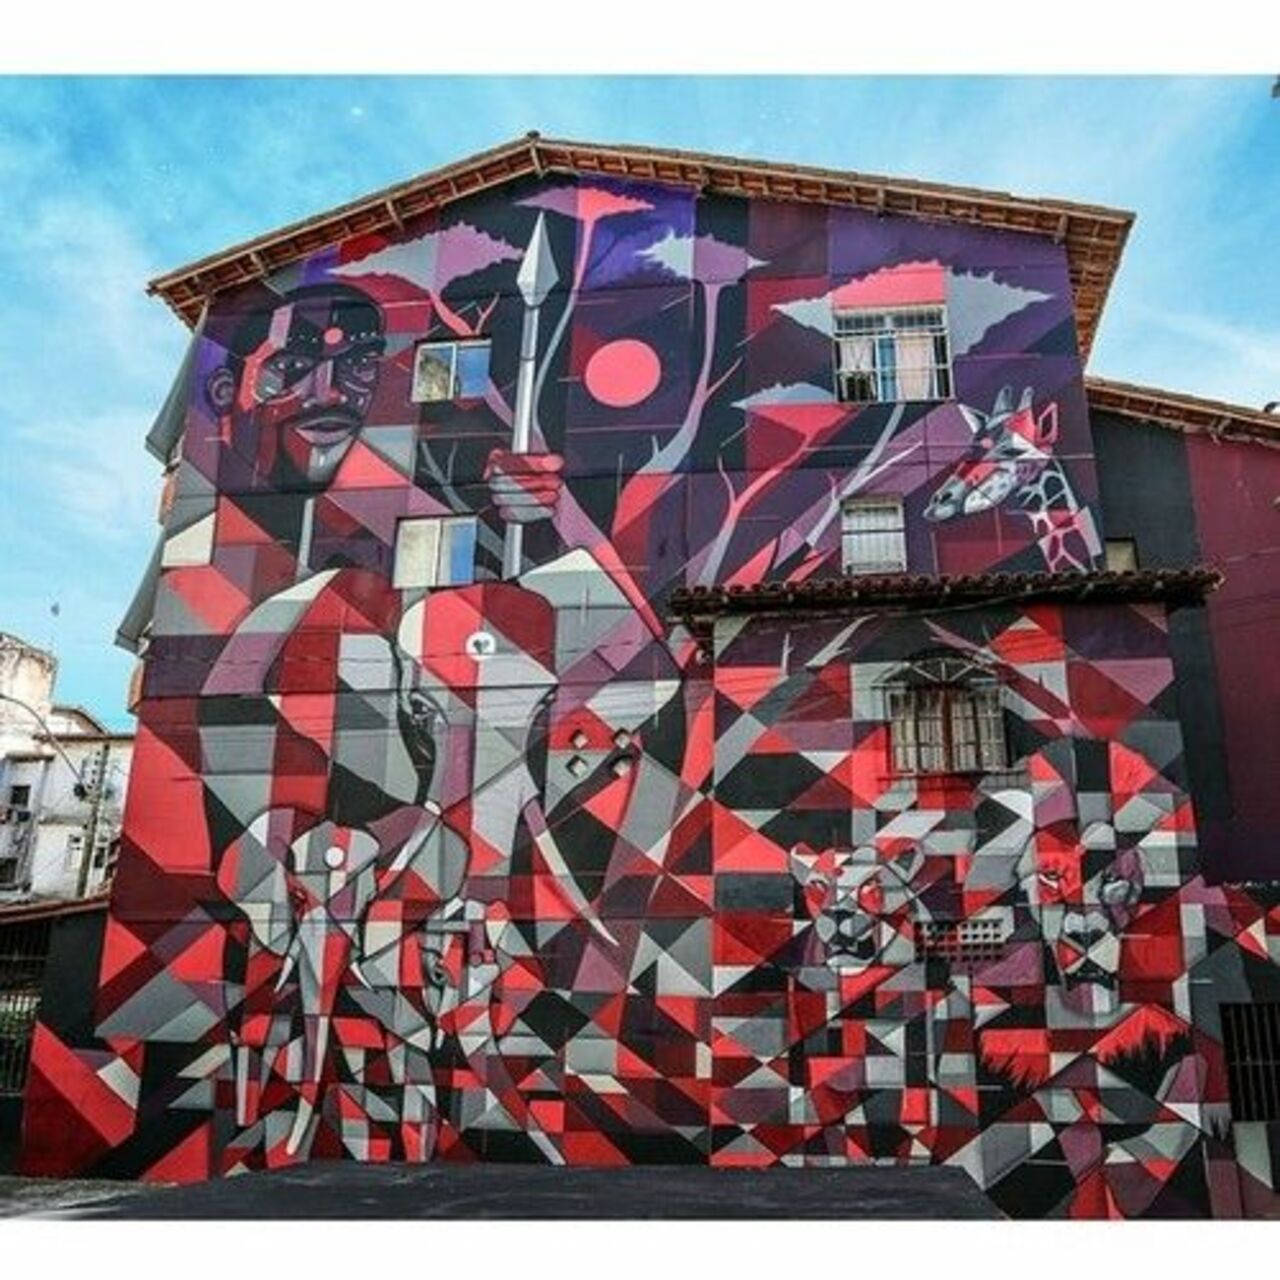 Ficore

@ficore #Graffiti #StreetArt #Mural #painting #Urban #Art http://t.co/jmLzJSJgjS